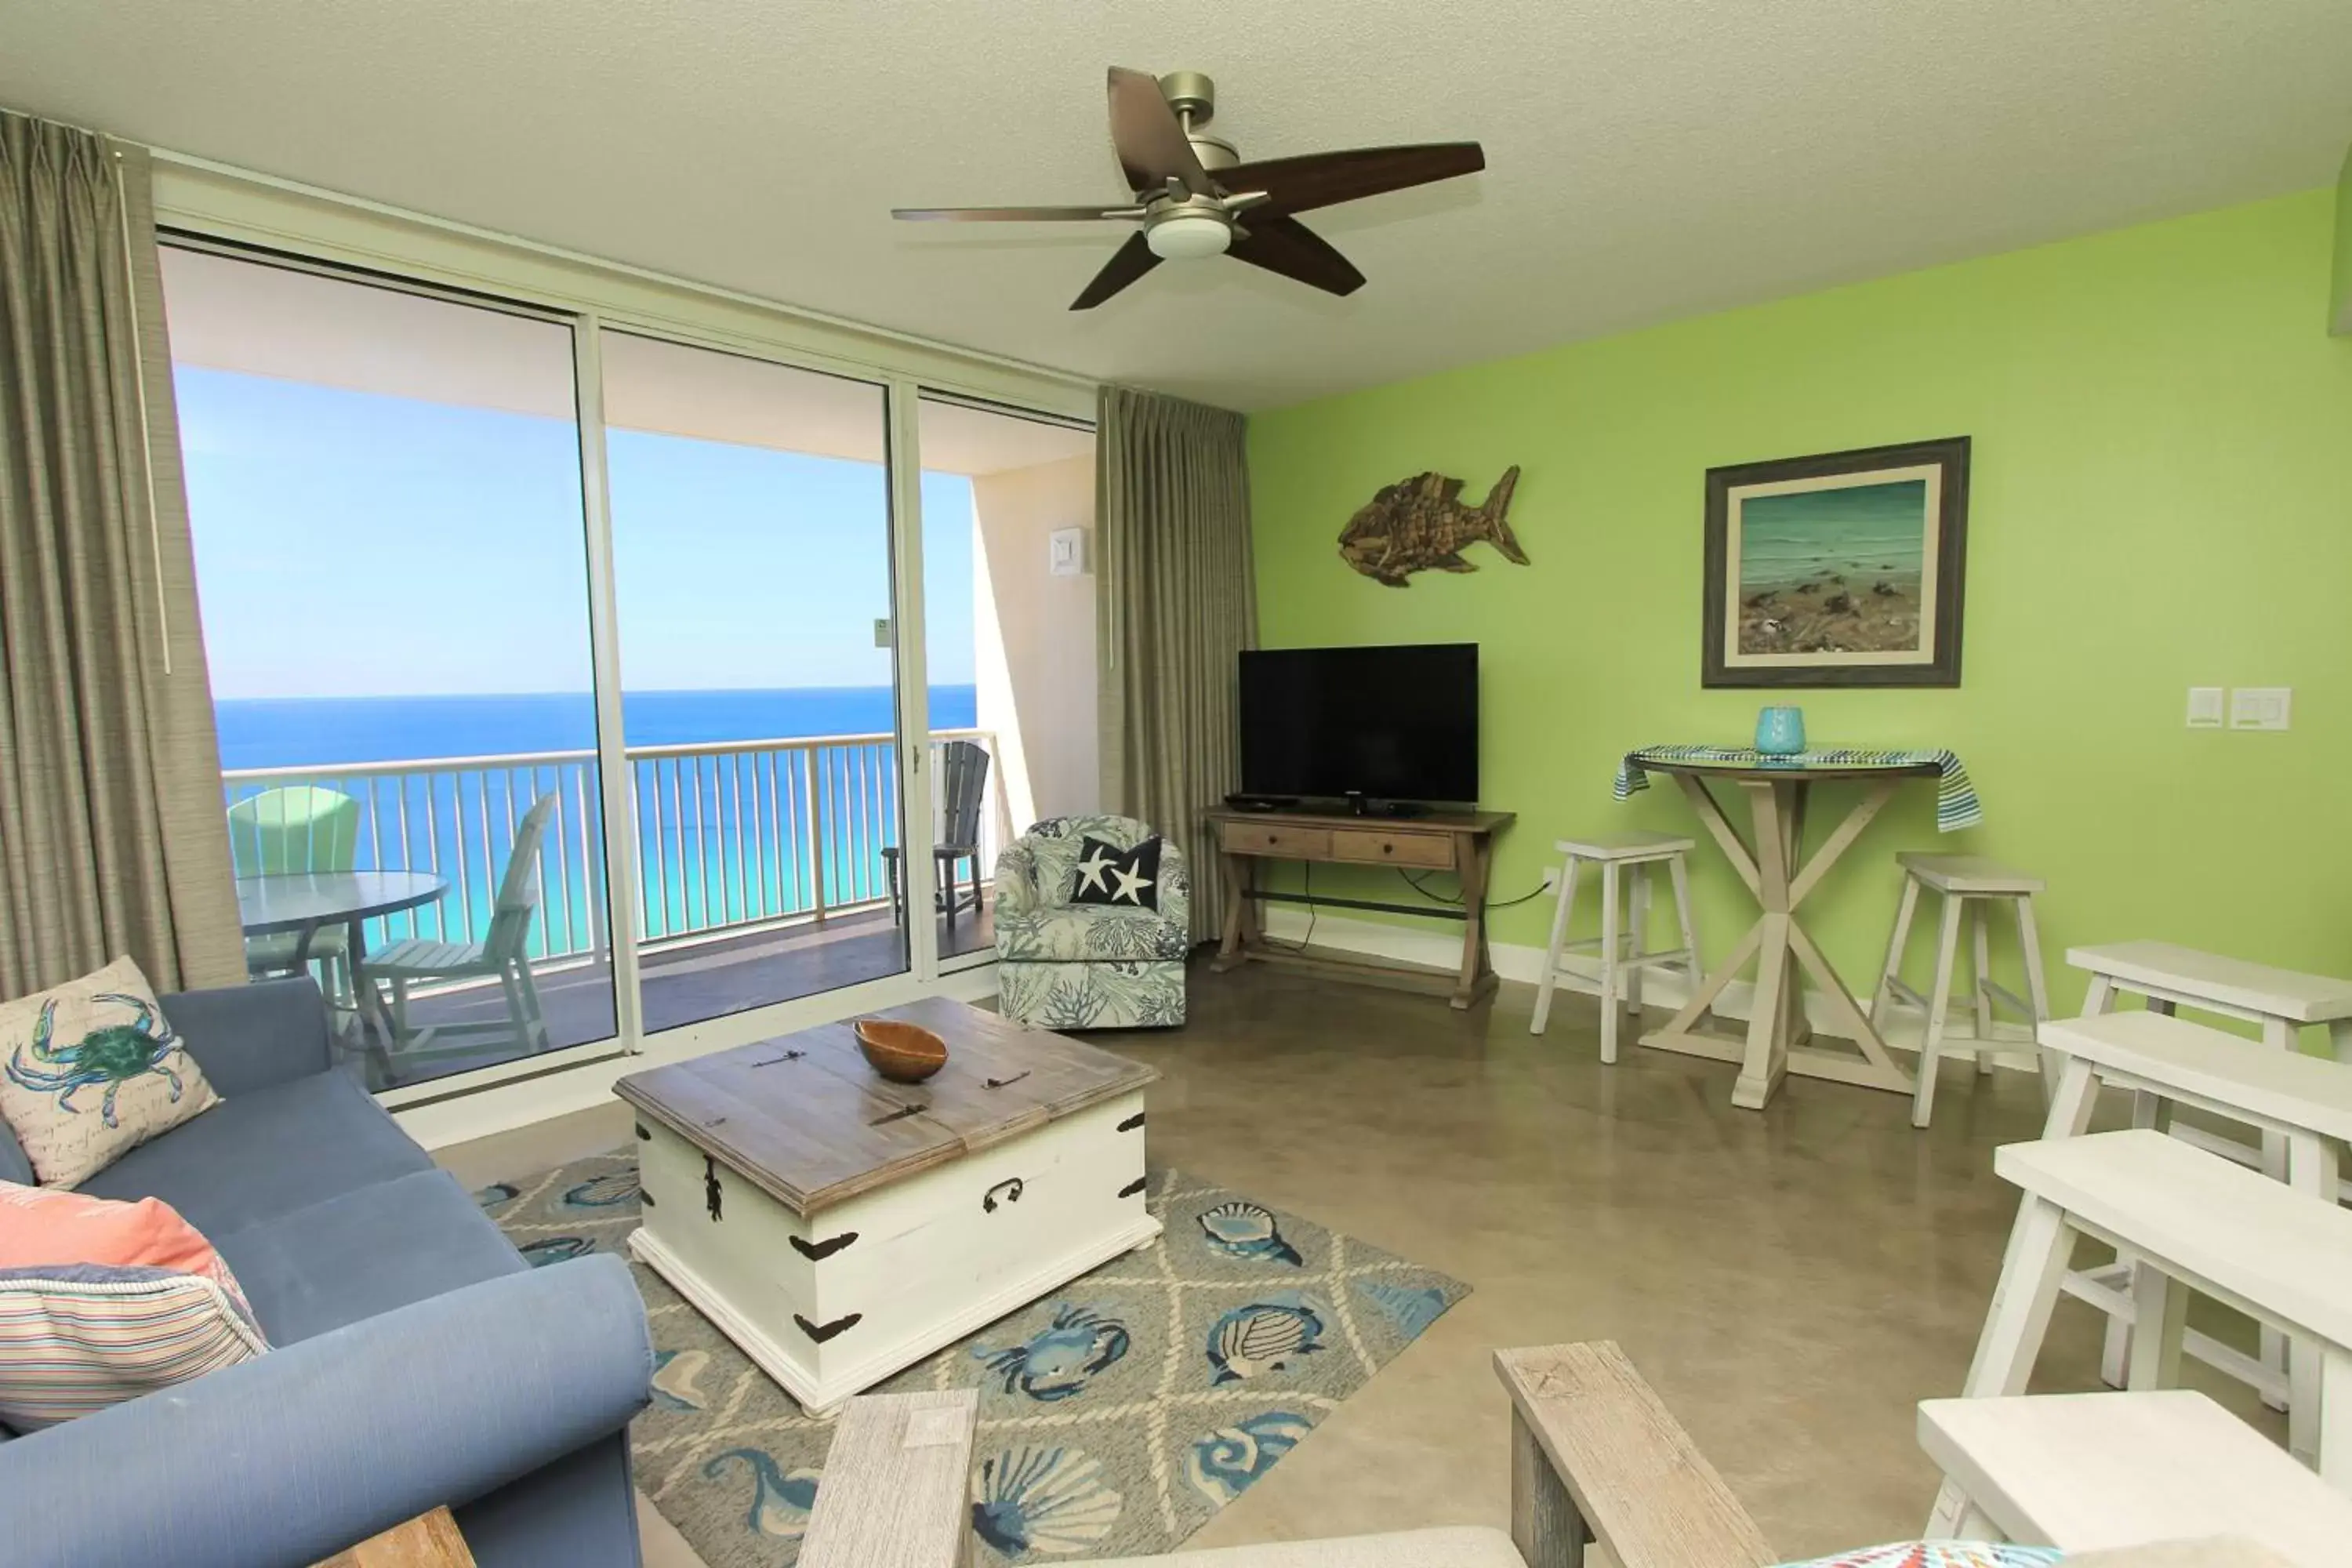 Seating Area in Majestic Beach Resort, Panama City Beach, Fl